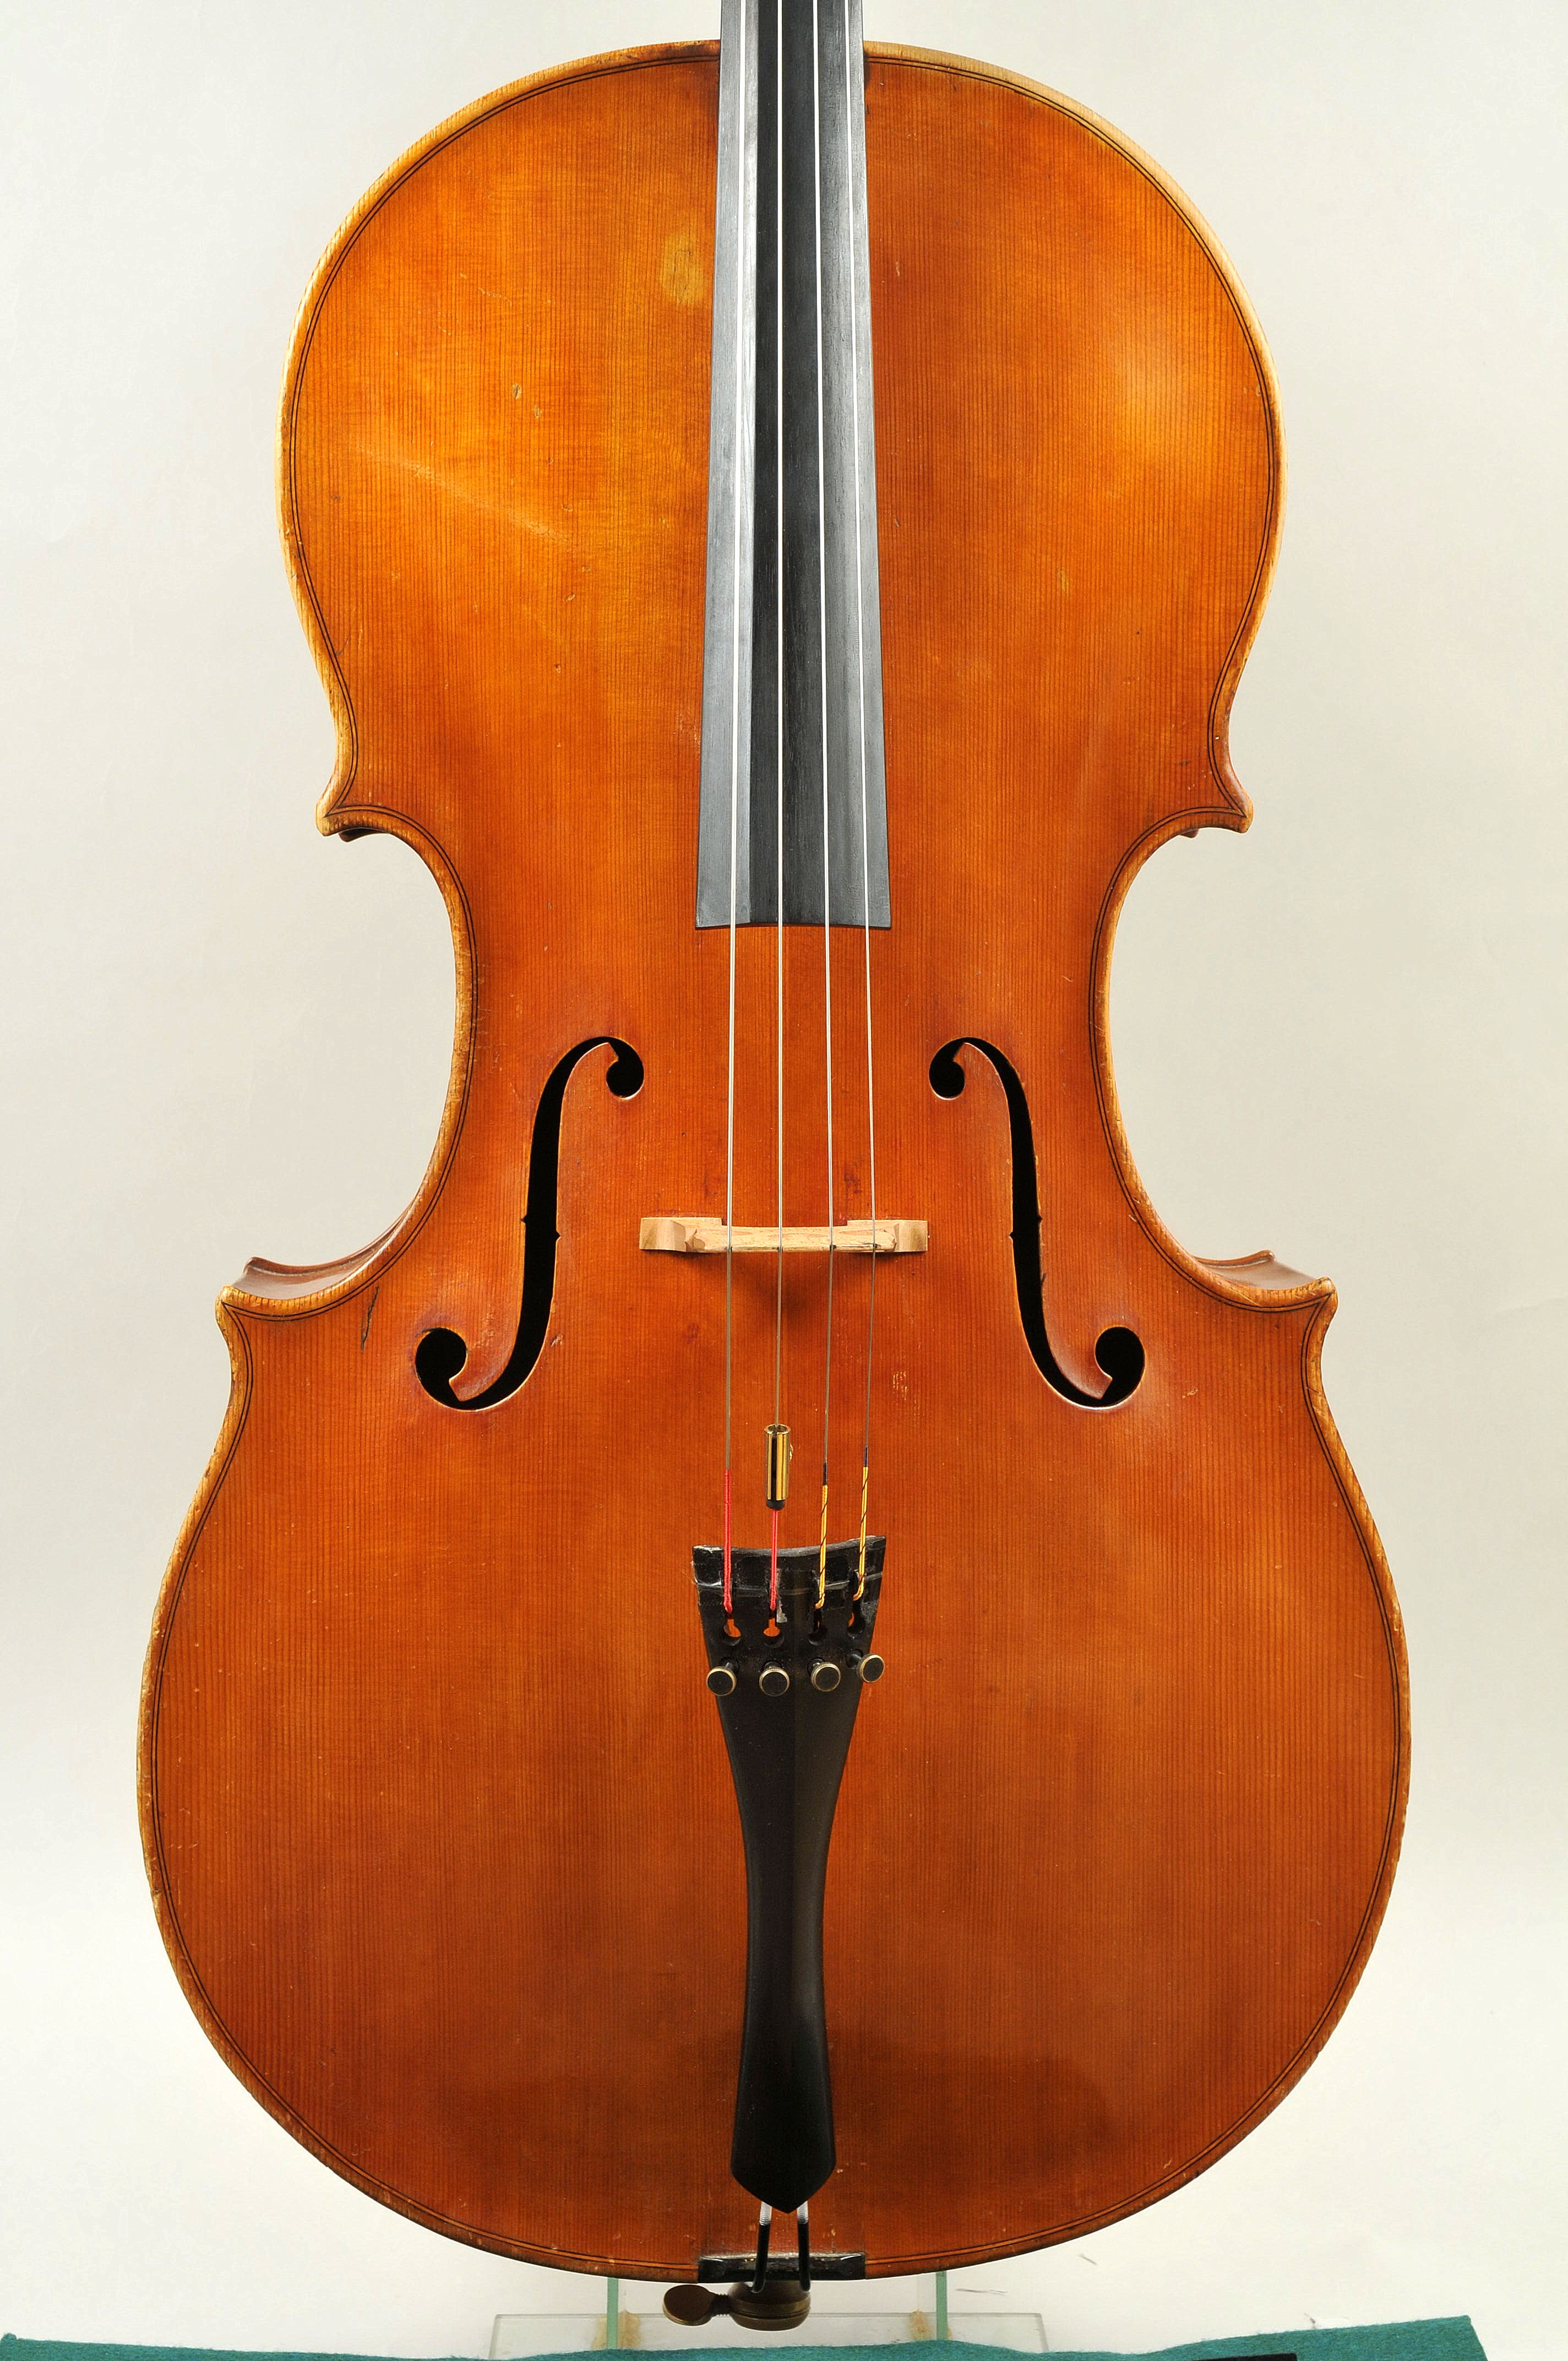 Cello from Ferrara labelled R.Antoniazzi